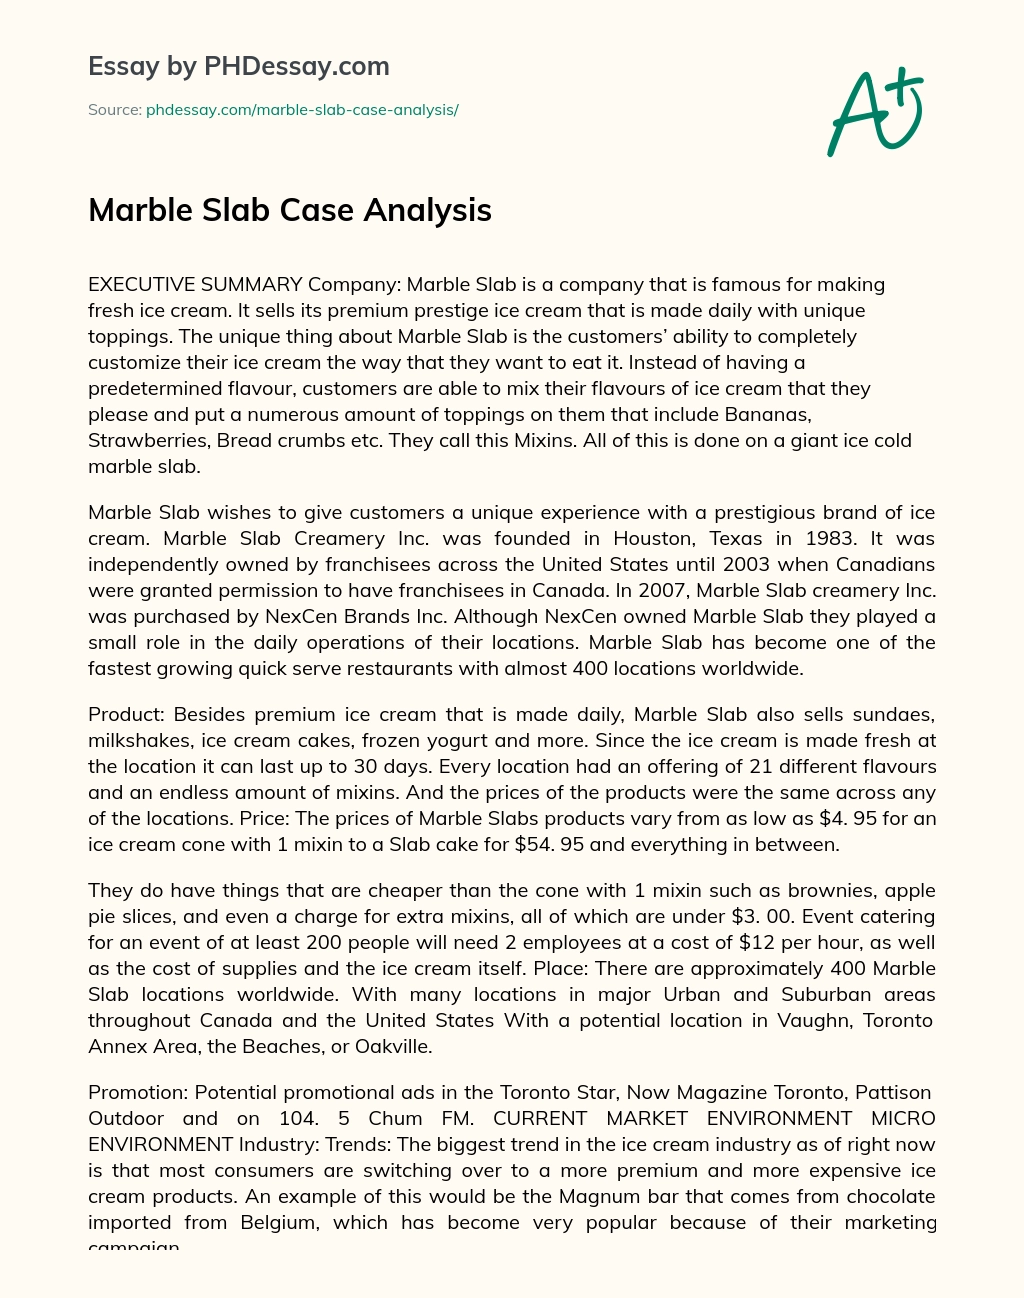 Marble Slab Case Analysis essay